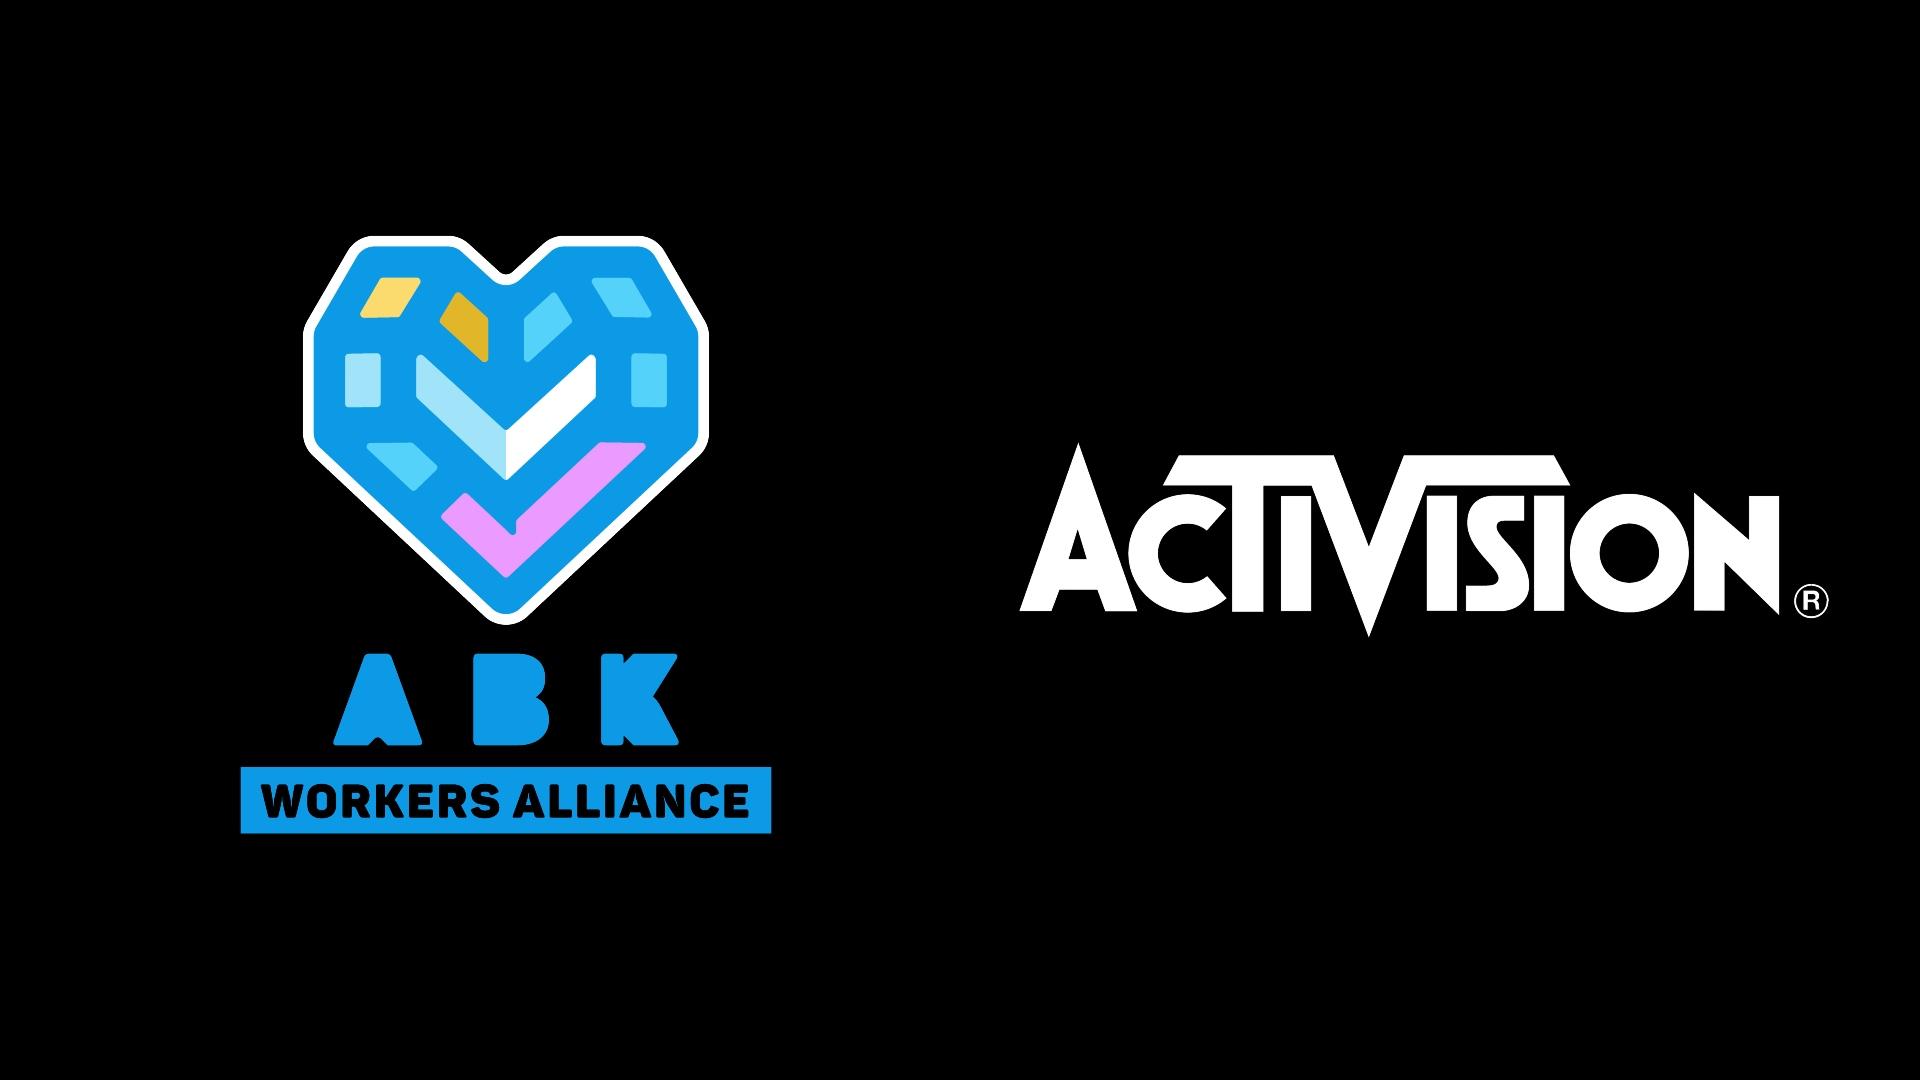 ABK Workers Alliance logo next to Activision logo on black background